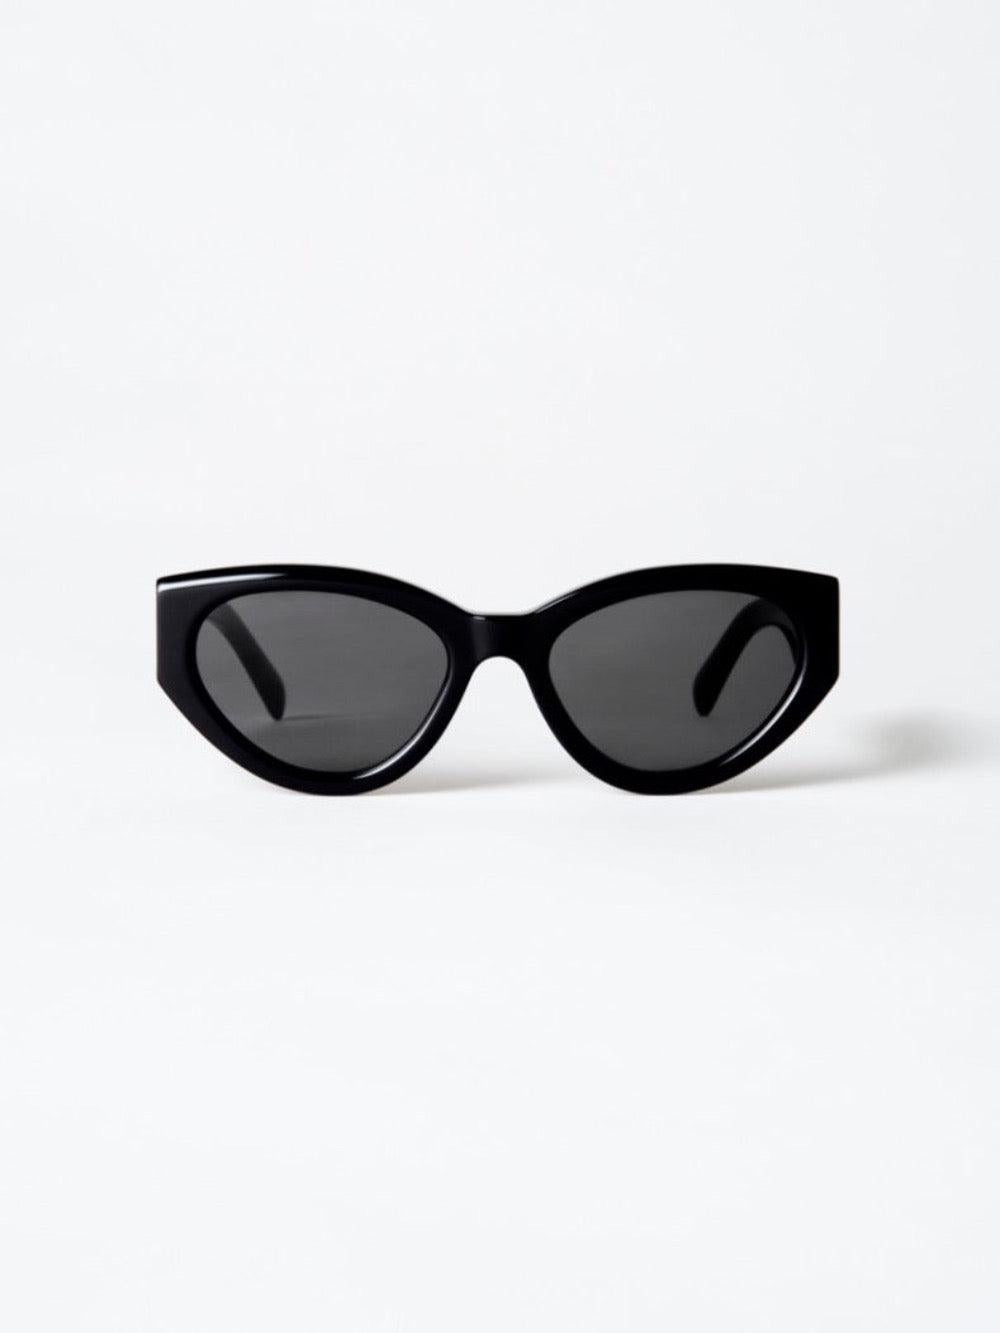 Chimi 06.2 Sunglasses in Black